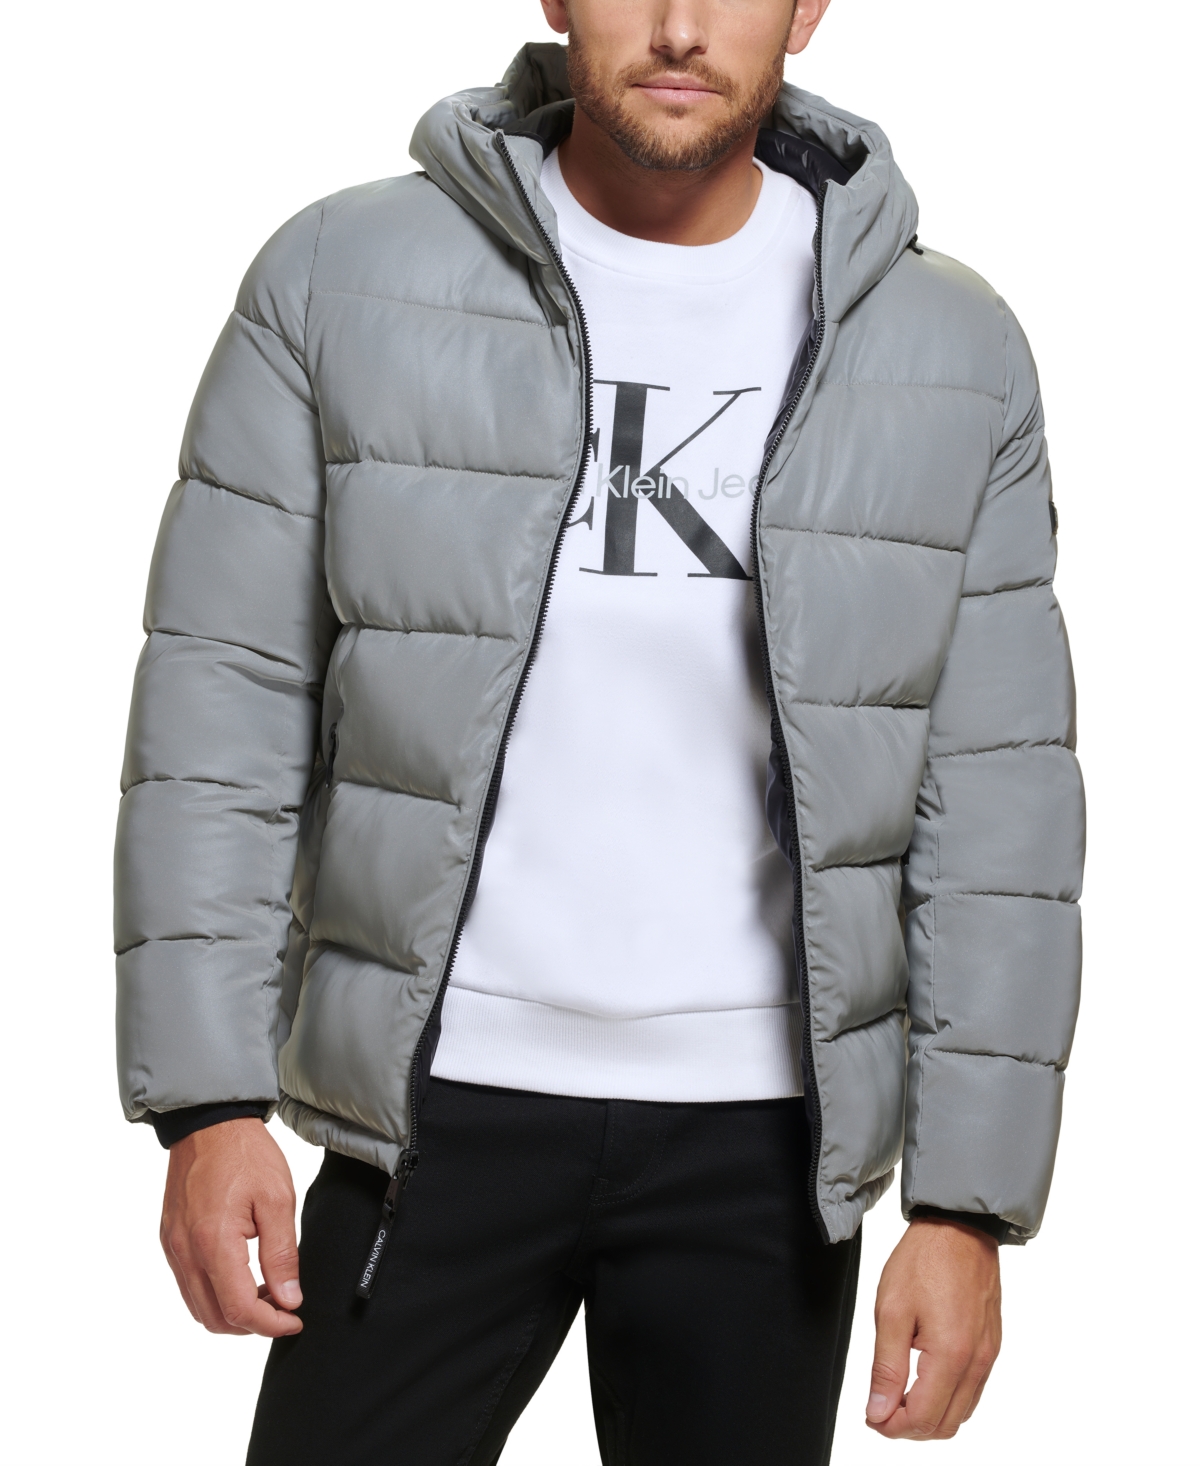 Calvin Klein Men's High Shine Hooded Puffer Jacket - Black - Size M